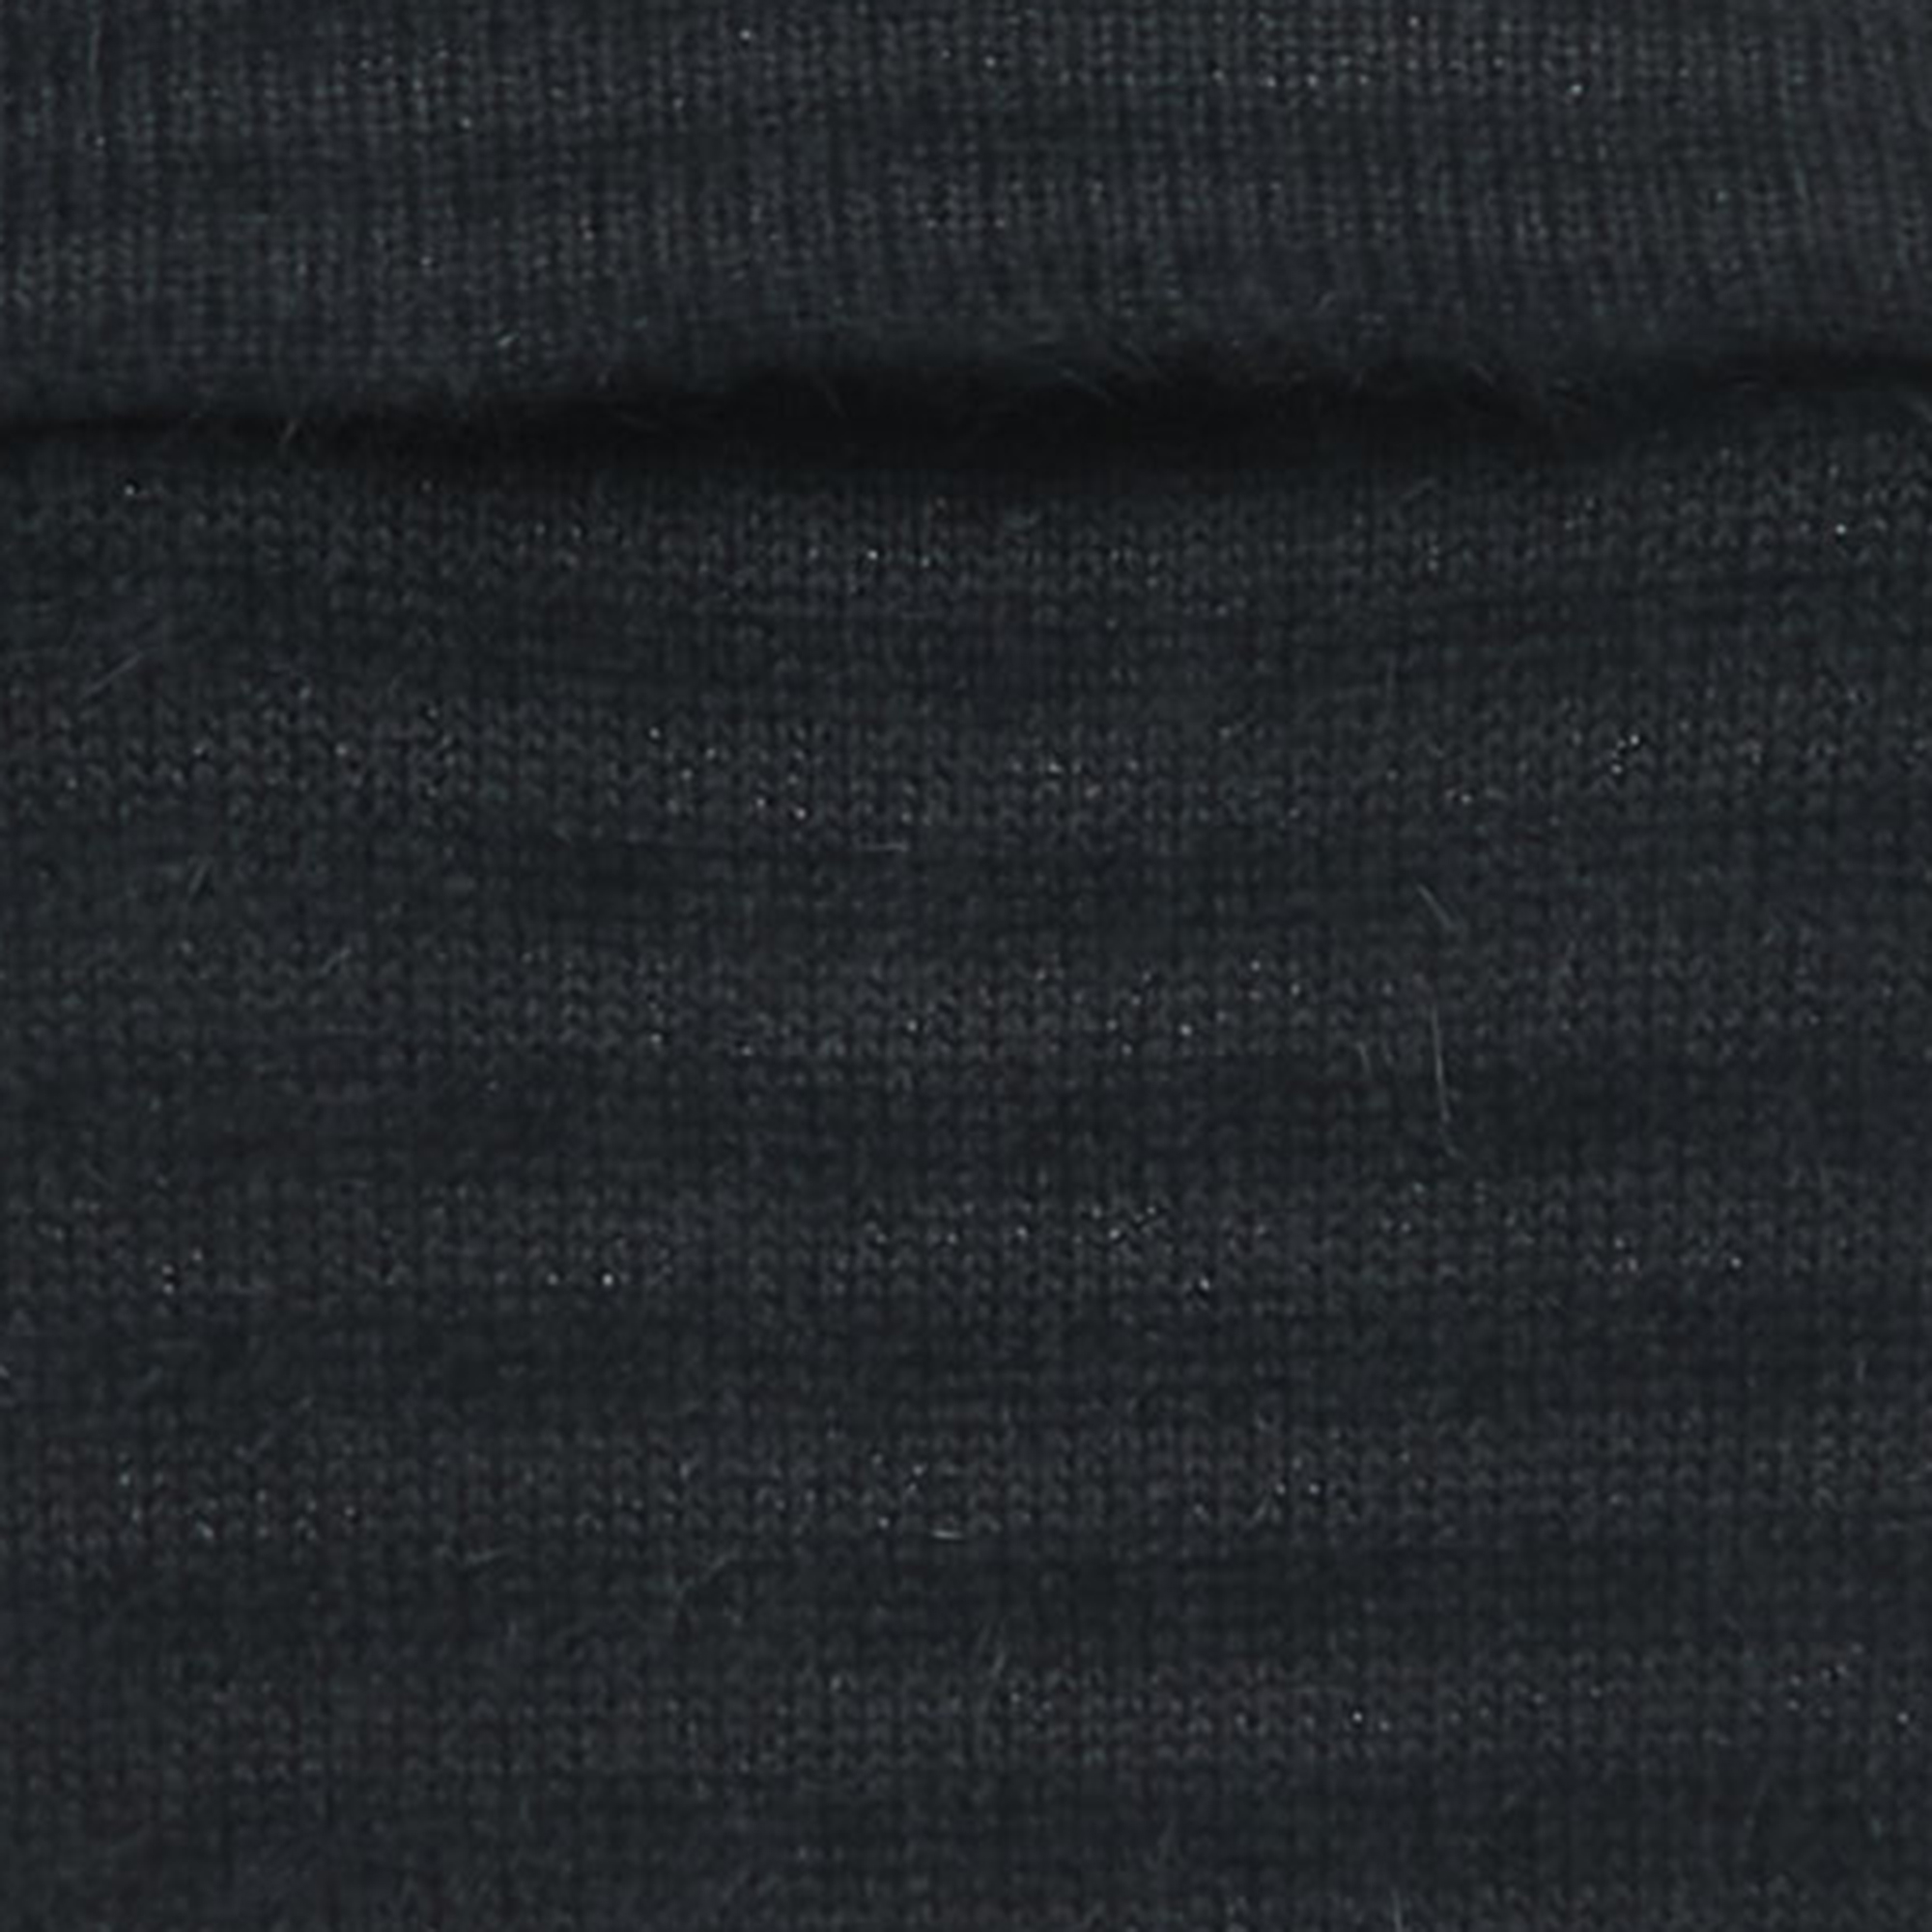 Chanel Black Cotton & Angora Blend Knit Off-Shoulder Top L